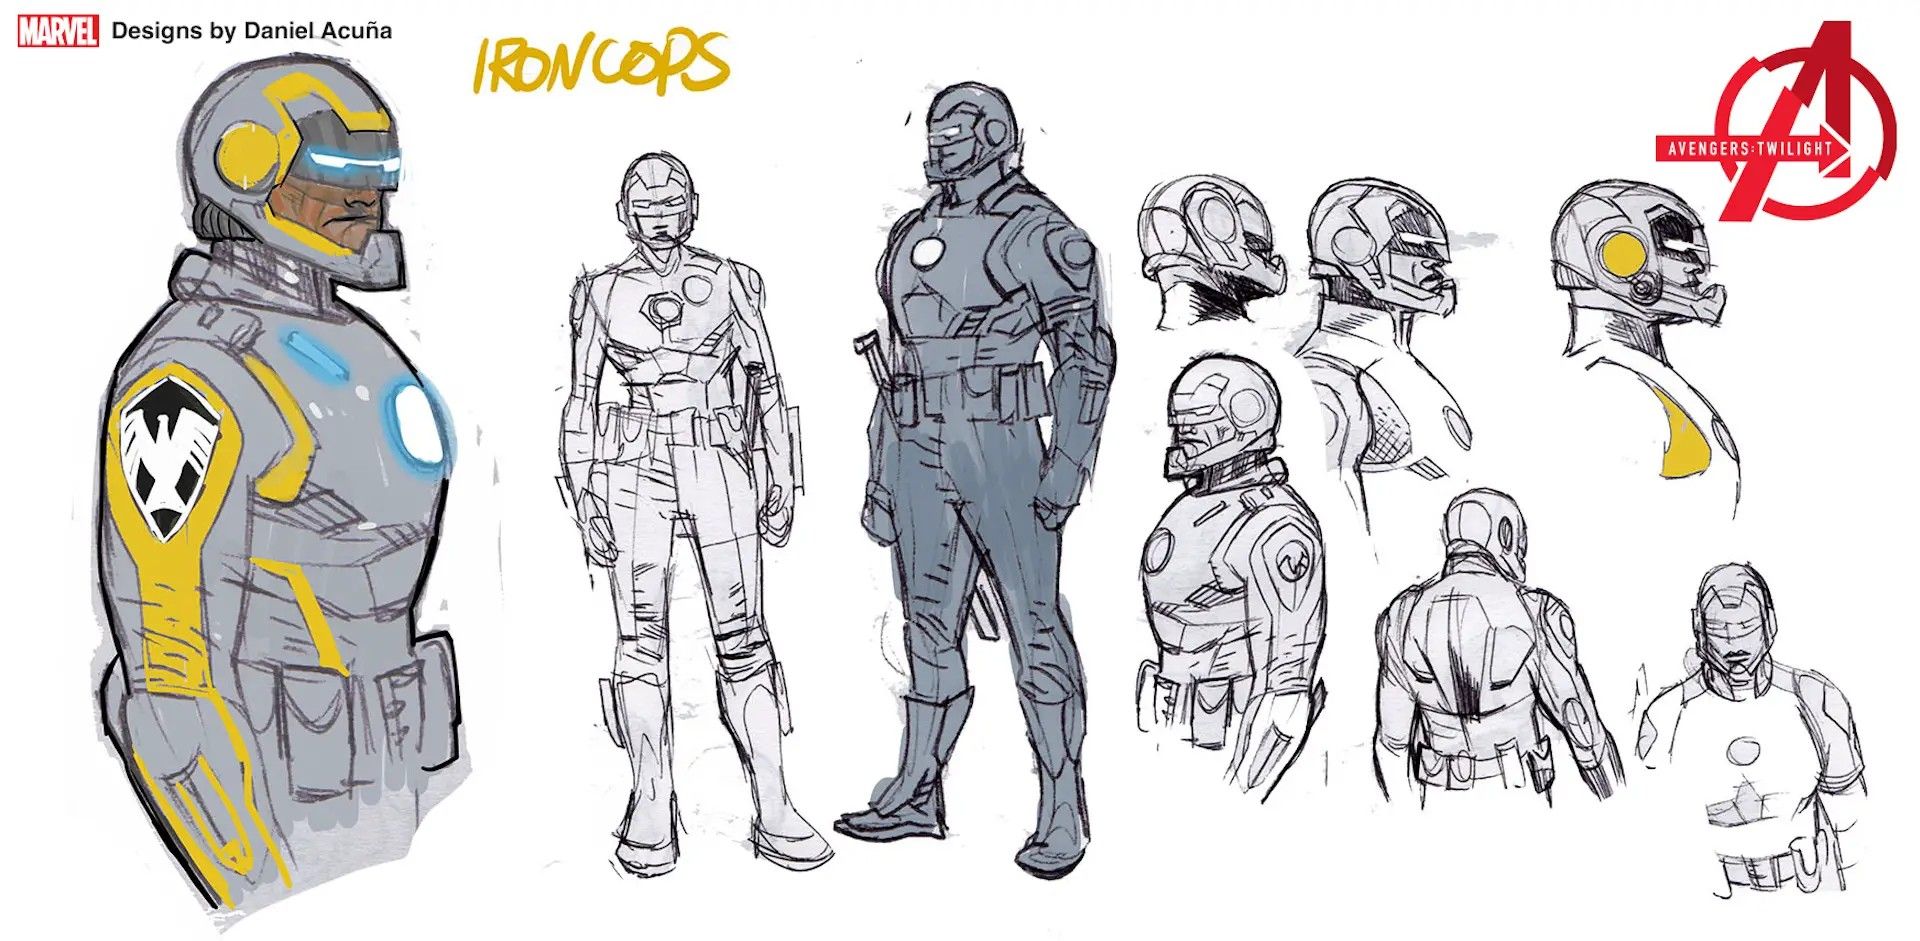 Defenders vs Iron Cops: Marvel’s New Civil War Exposes the Avengers’ Dark Future Legacy